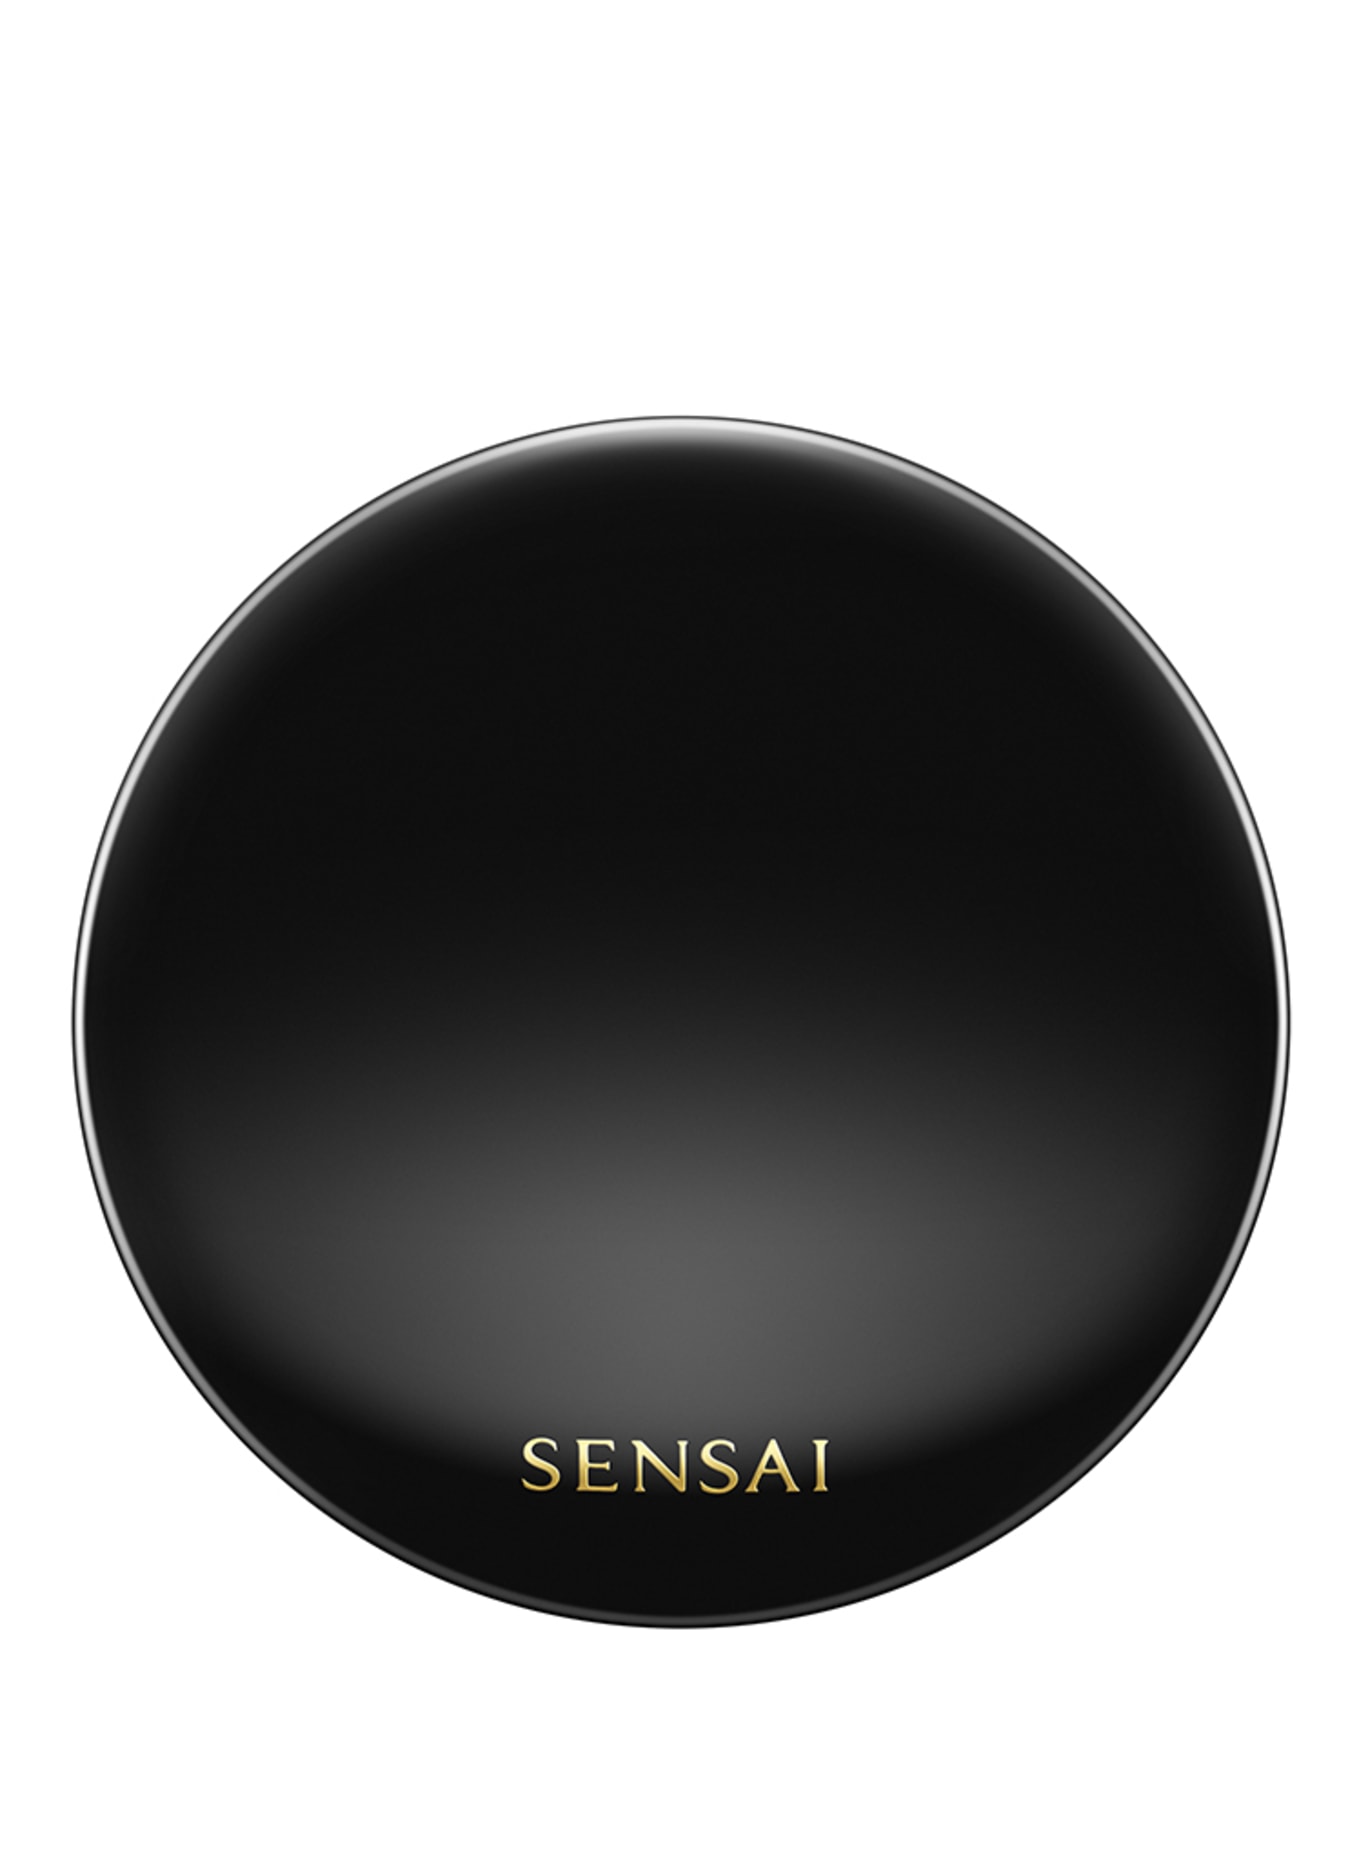 SENSAI TOTAL FINISH POWDER FOUNDATION CASE (Bild 3)